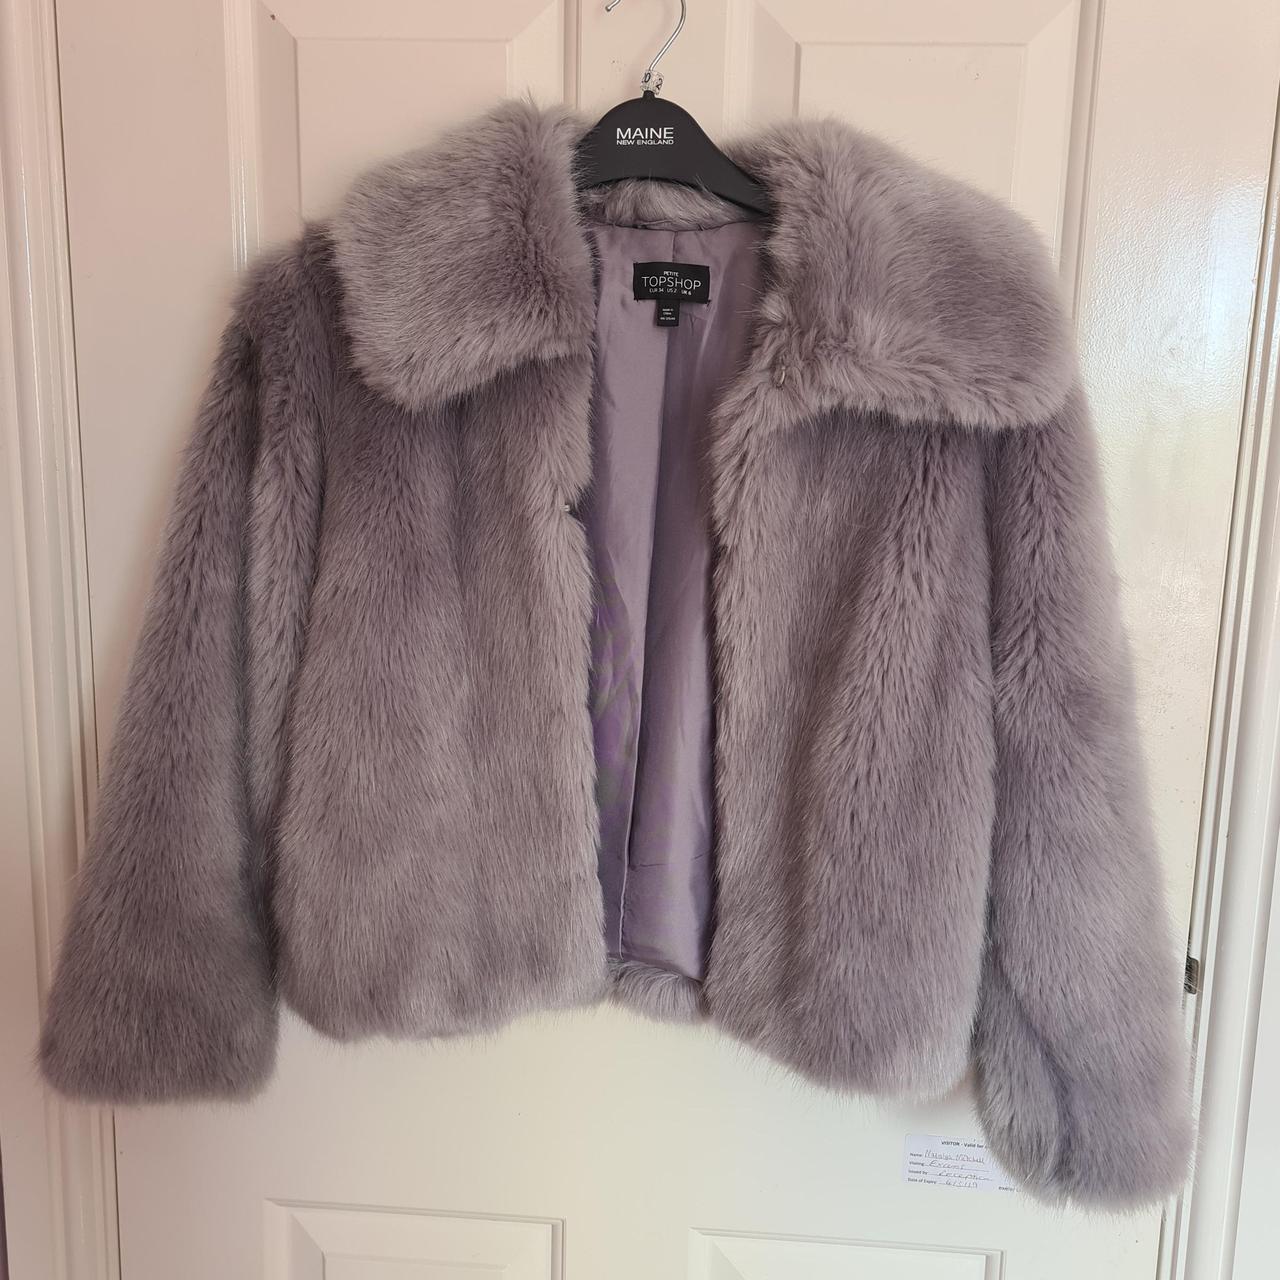 BRAND NEW Topshop faux fur coat. petite coat - Depop